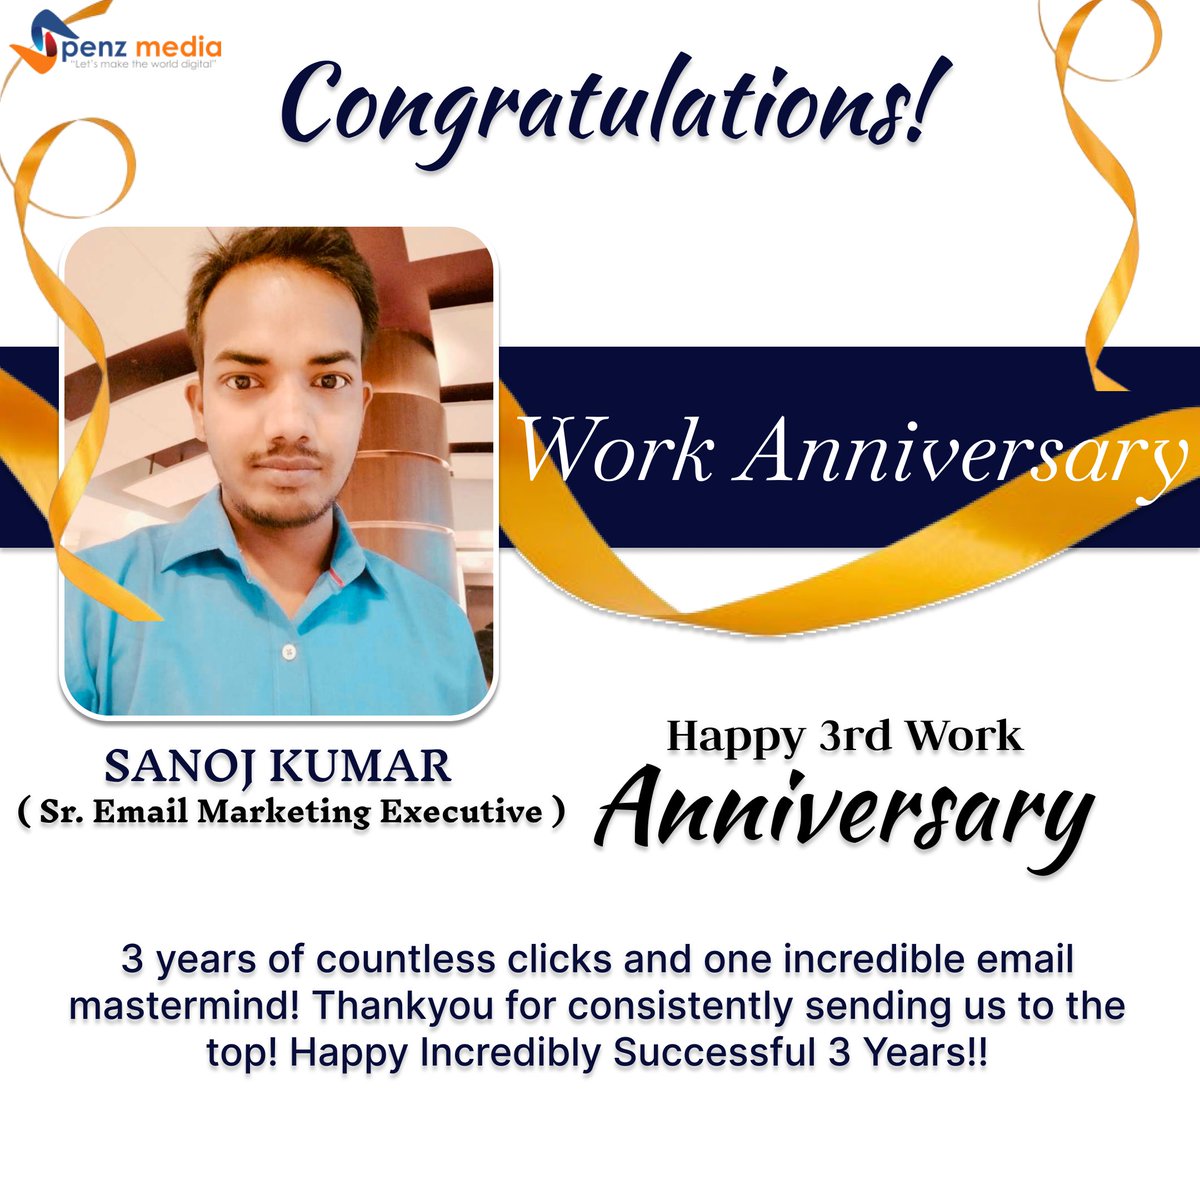 Wishing you a very Happy Work Anniversary Sanoj Kumar 🥳🥳
.
.
.
.
.
#workanniversary  #workanniversarycelebration #workanniversaries #workanniversaryday #3yearsatwork  #success #successful #successatwork  #successfulyear   #bestdigitalmarketingcompany #spenzmedia